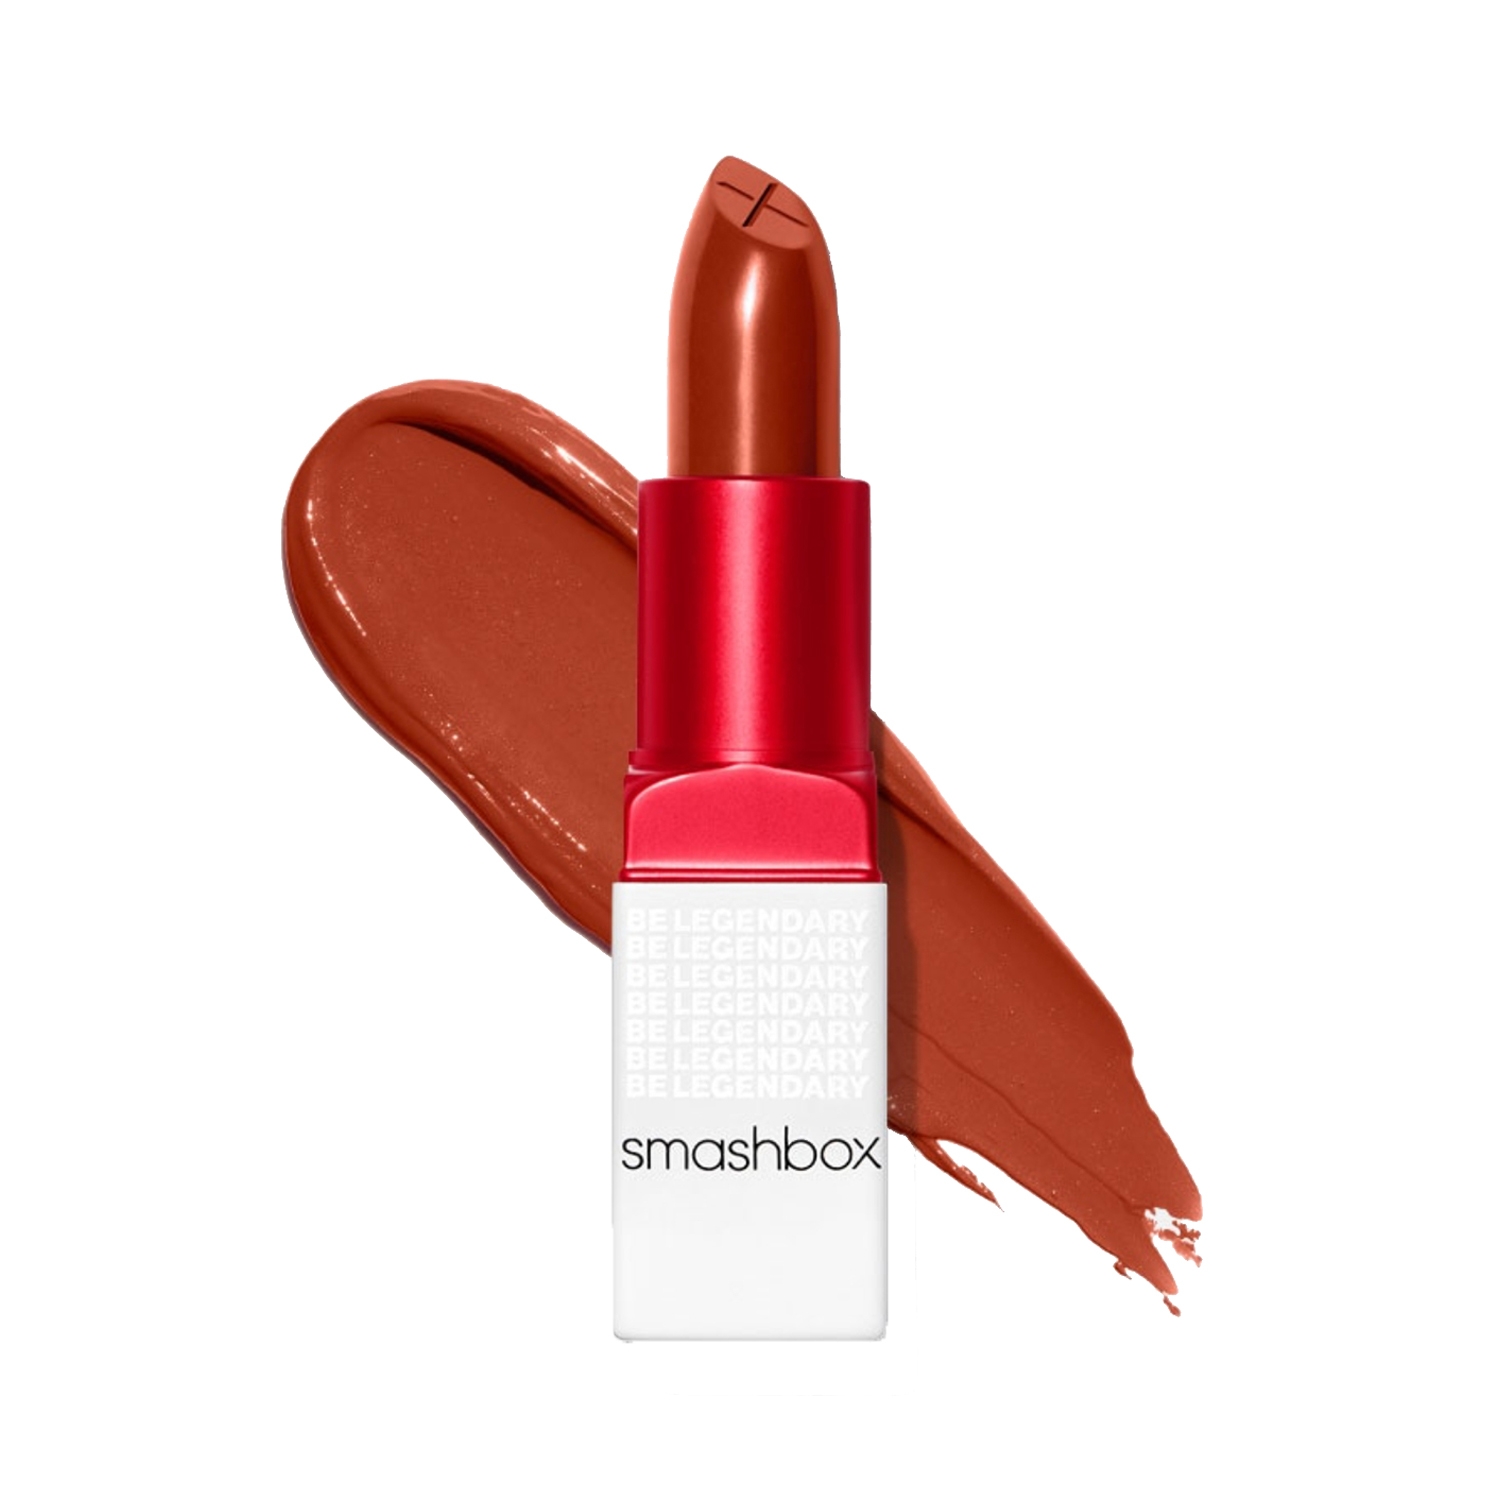 Smashbox Be Legendary Prime & Plush Lipstick - Burnt Orange (3.4g)